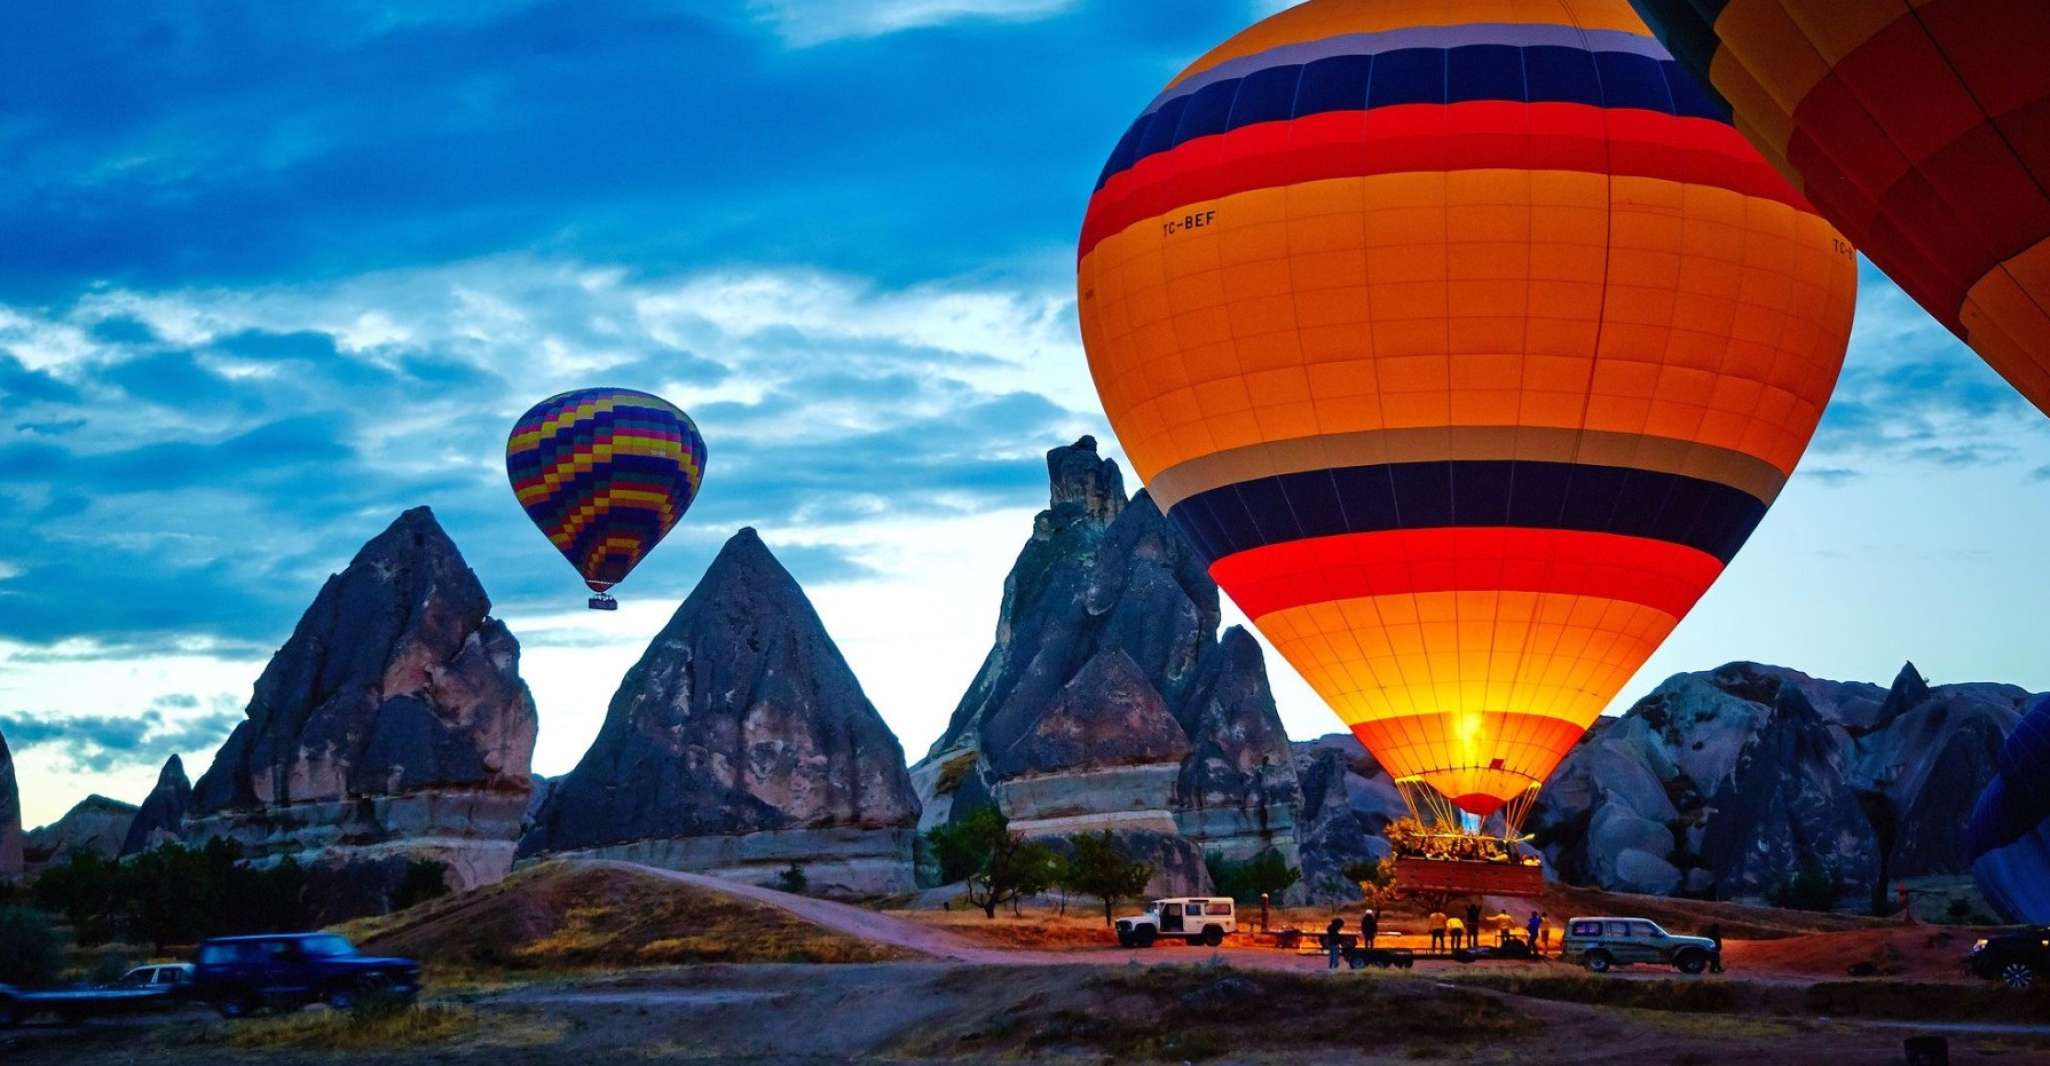 Cappadocia, Goreme Hot Air Balloon Flight Over Fairychimneys - Housity